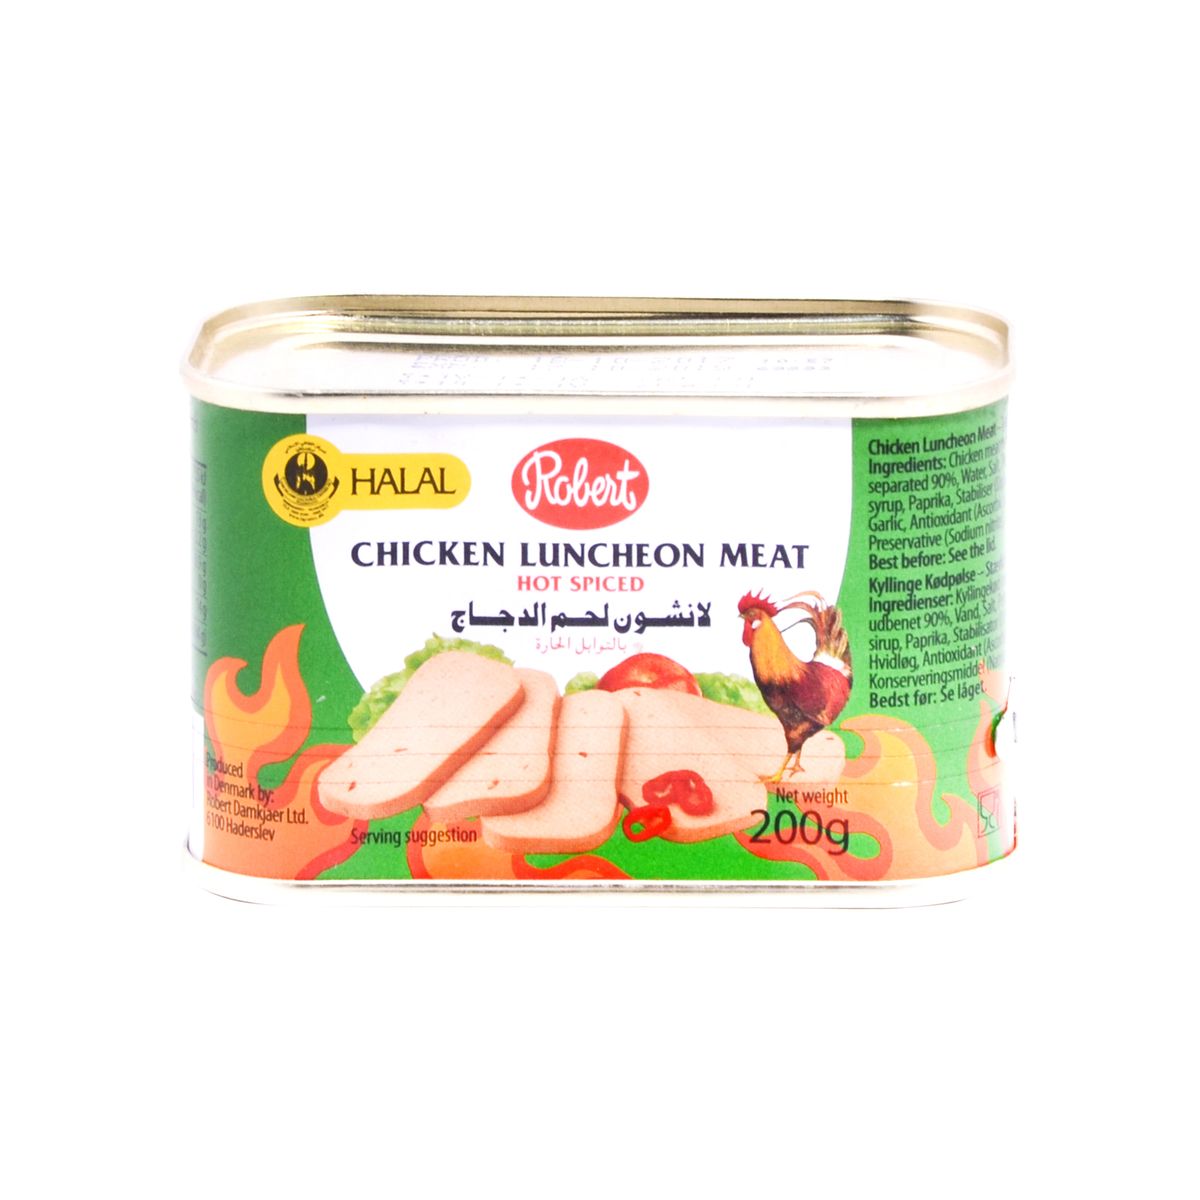 Robert Chicken Luncheon Meat Hot Spiced 200 g